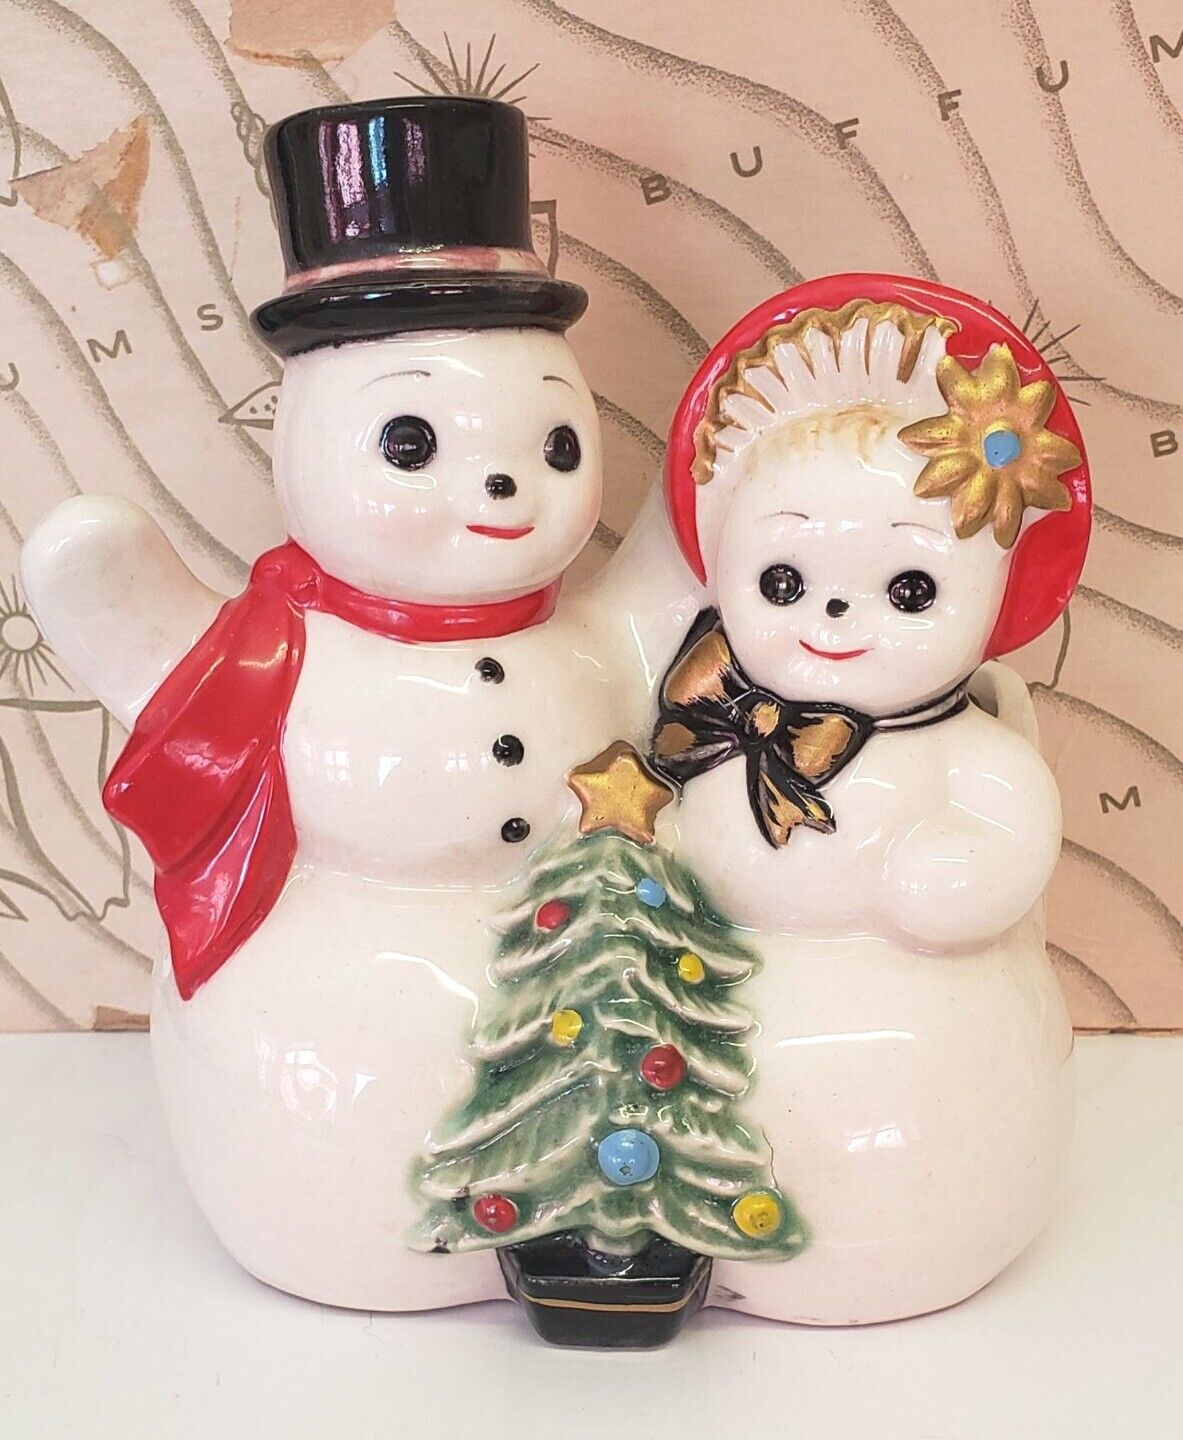 RARE Vintage Snowman Planter, PY Miyao? Norcrest? Lefton? Kitsch And Adorable